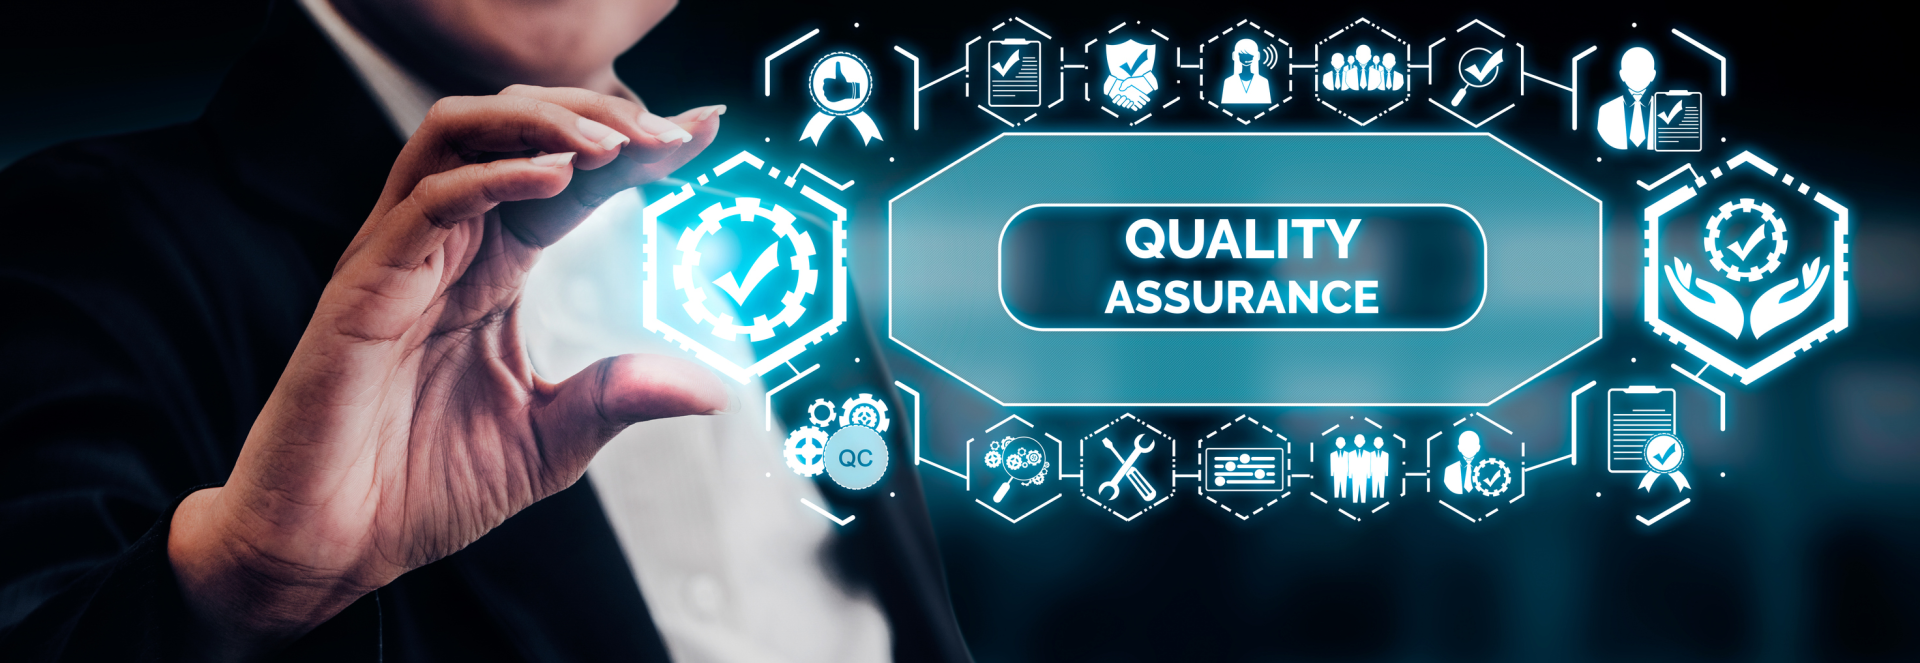 accreditation management software, asme, asme certification, asme mark, audit management software, quality management software, accreditation management system